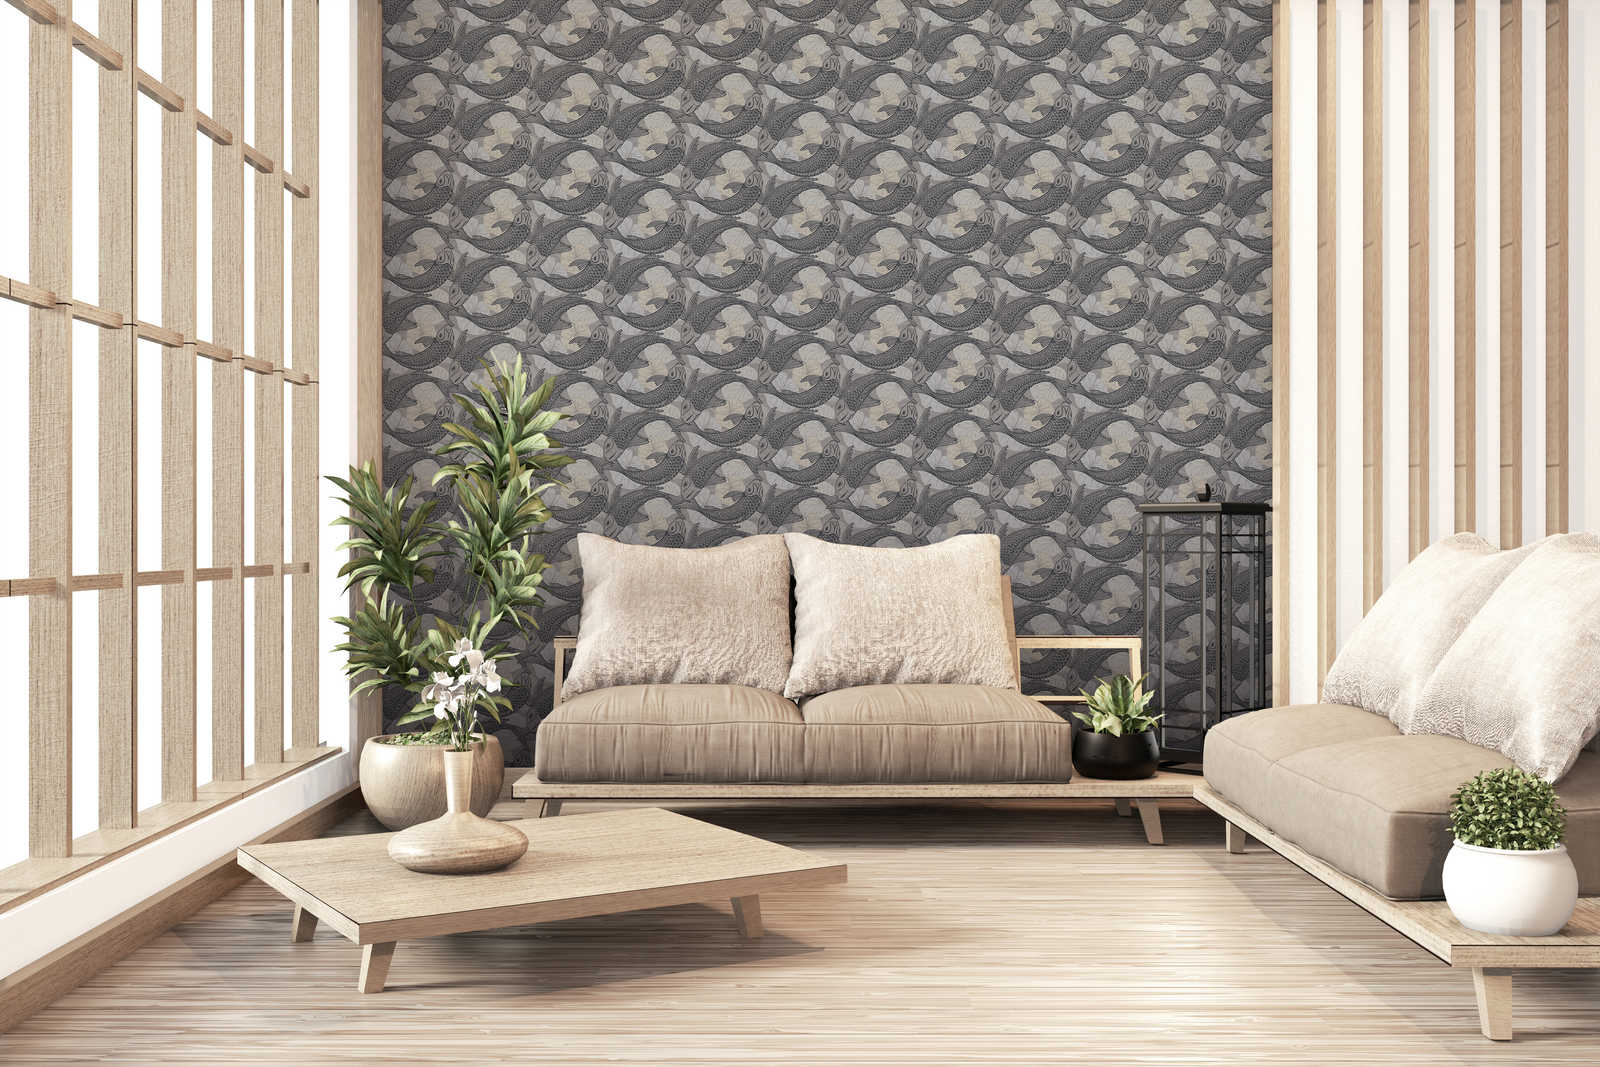             Wallpaper Asian design with koi motif & metallic effect - beige, grey, black
        